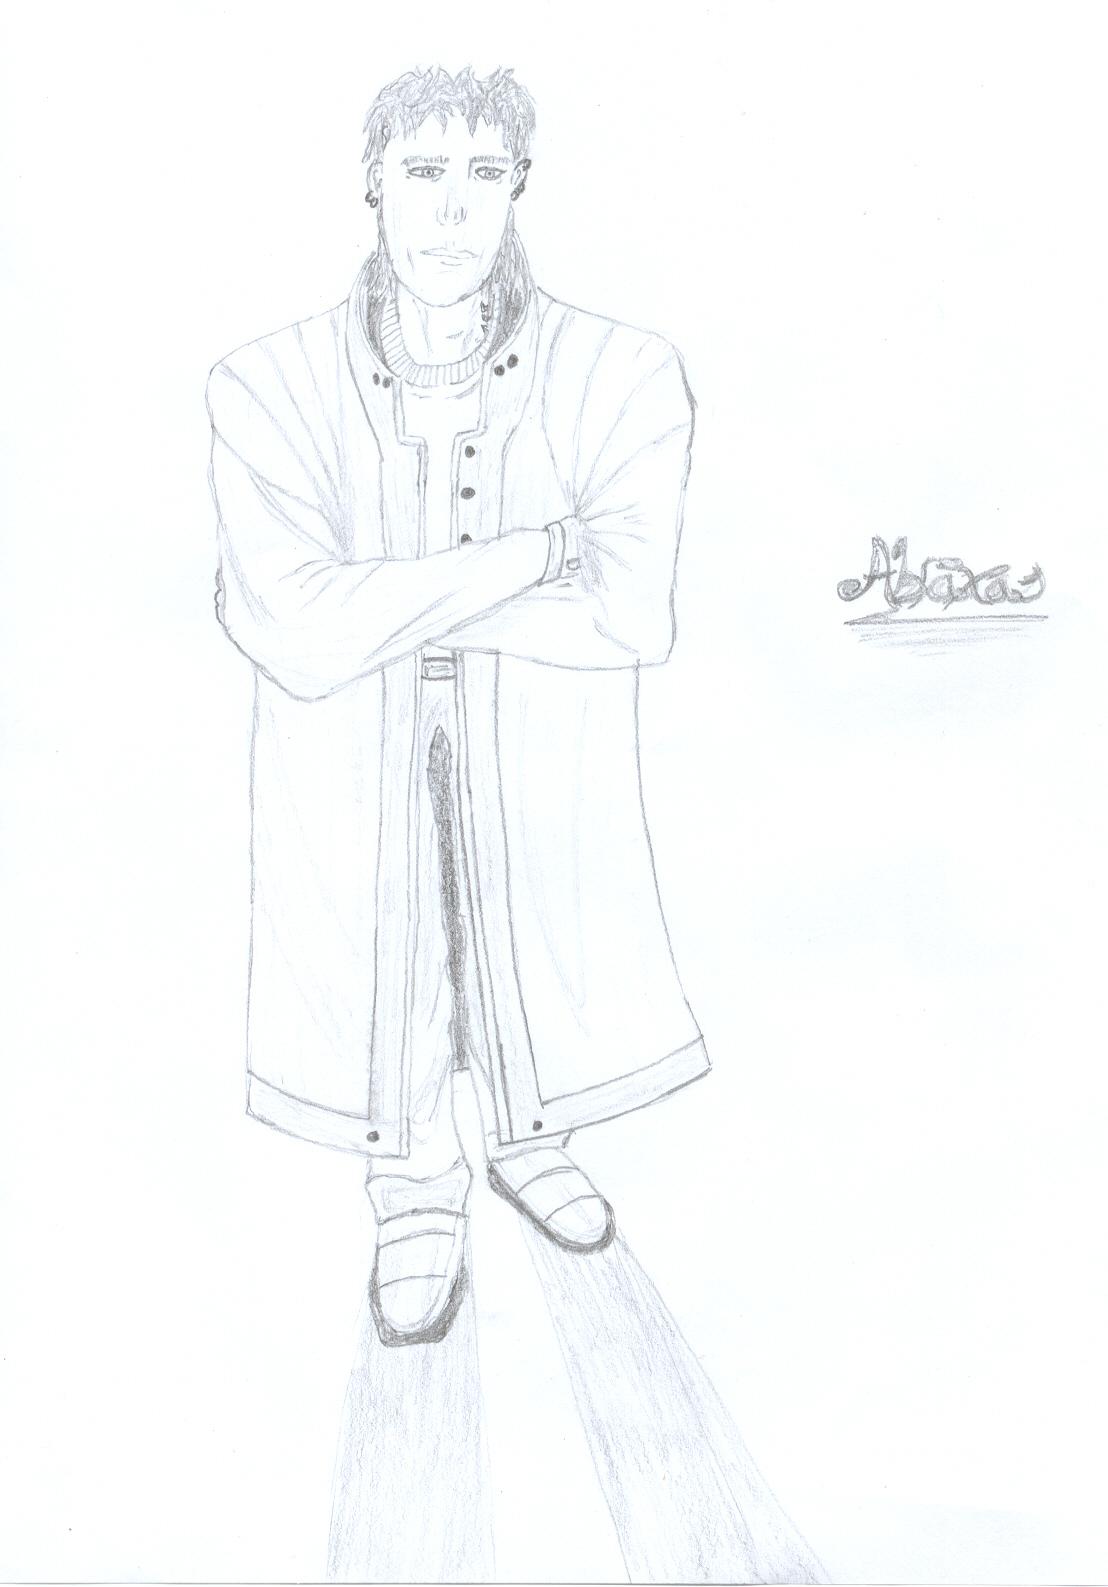 Man in raincoat by Abraxas